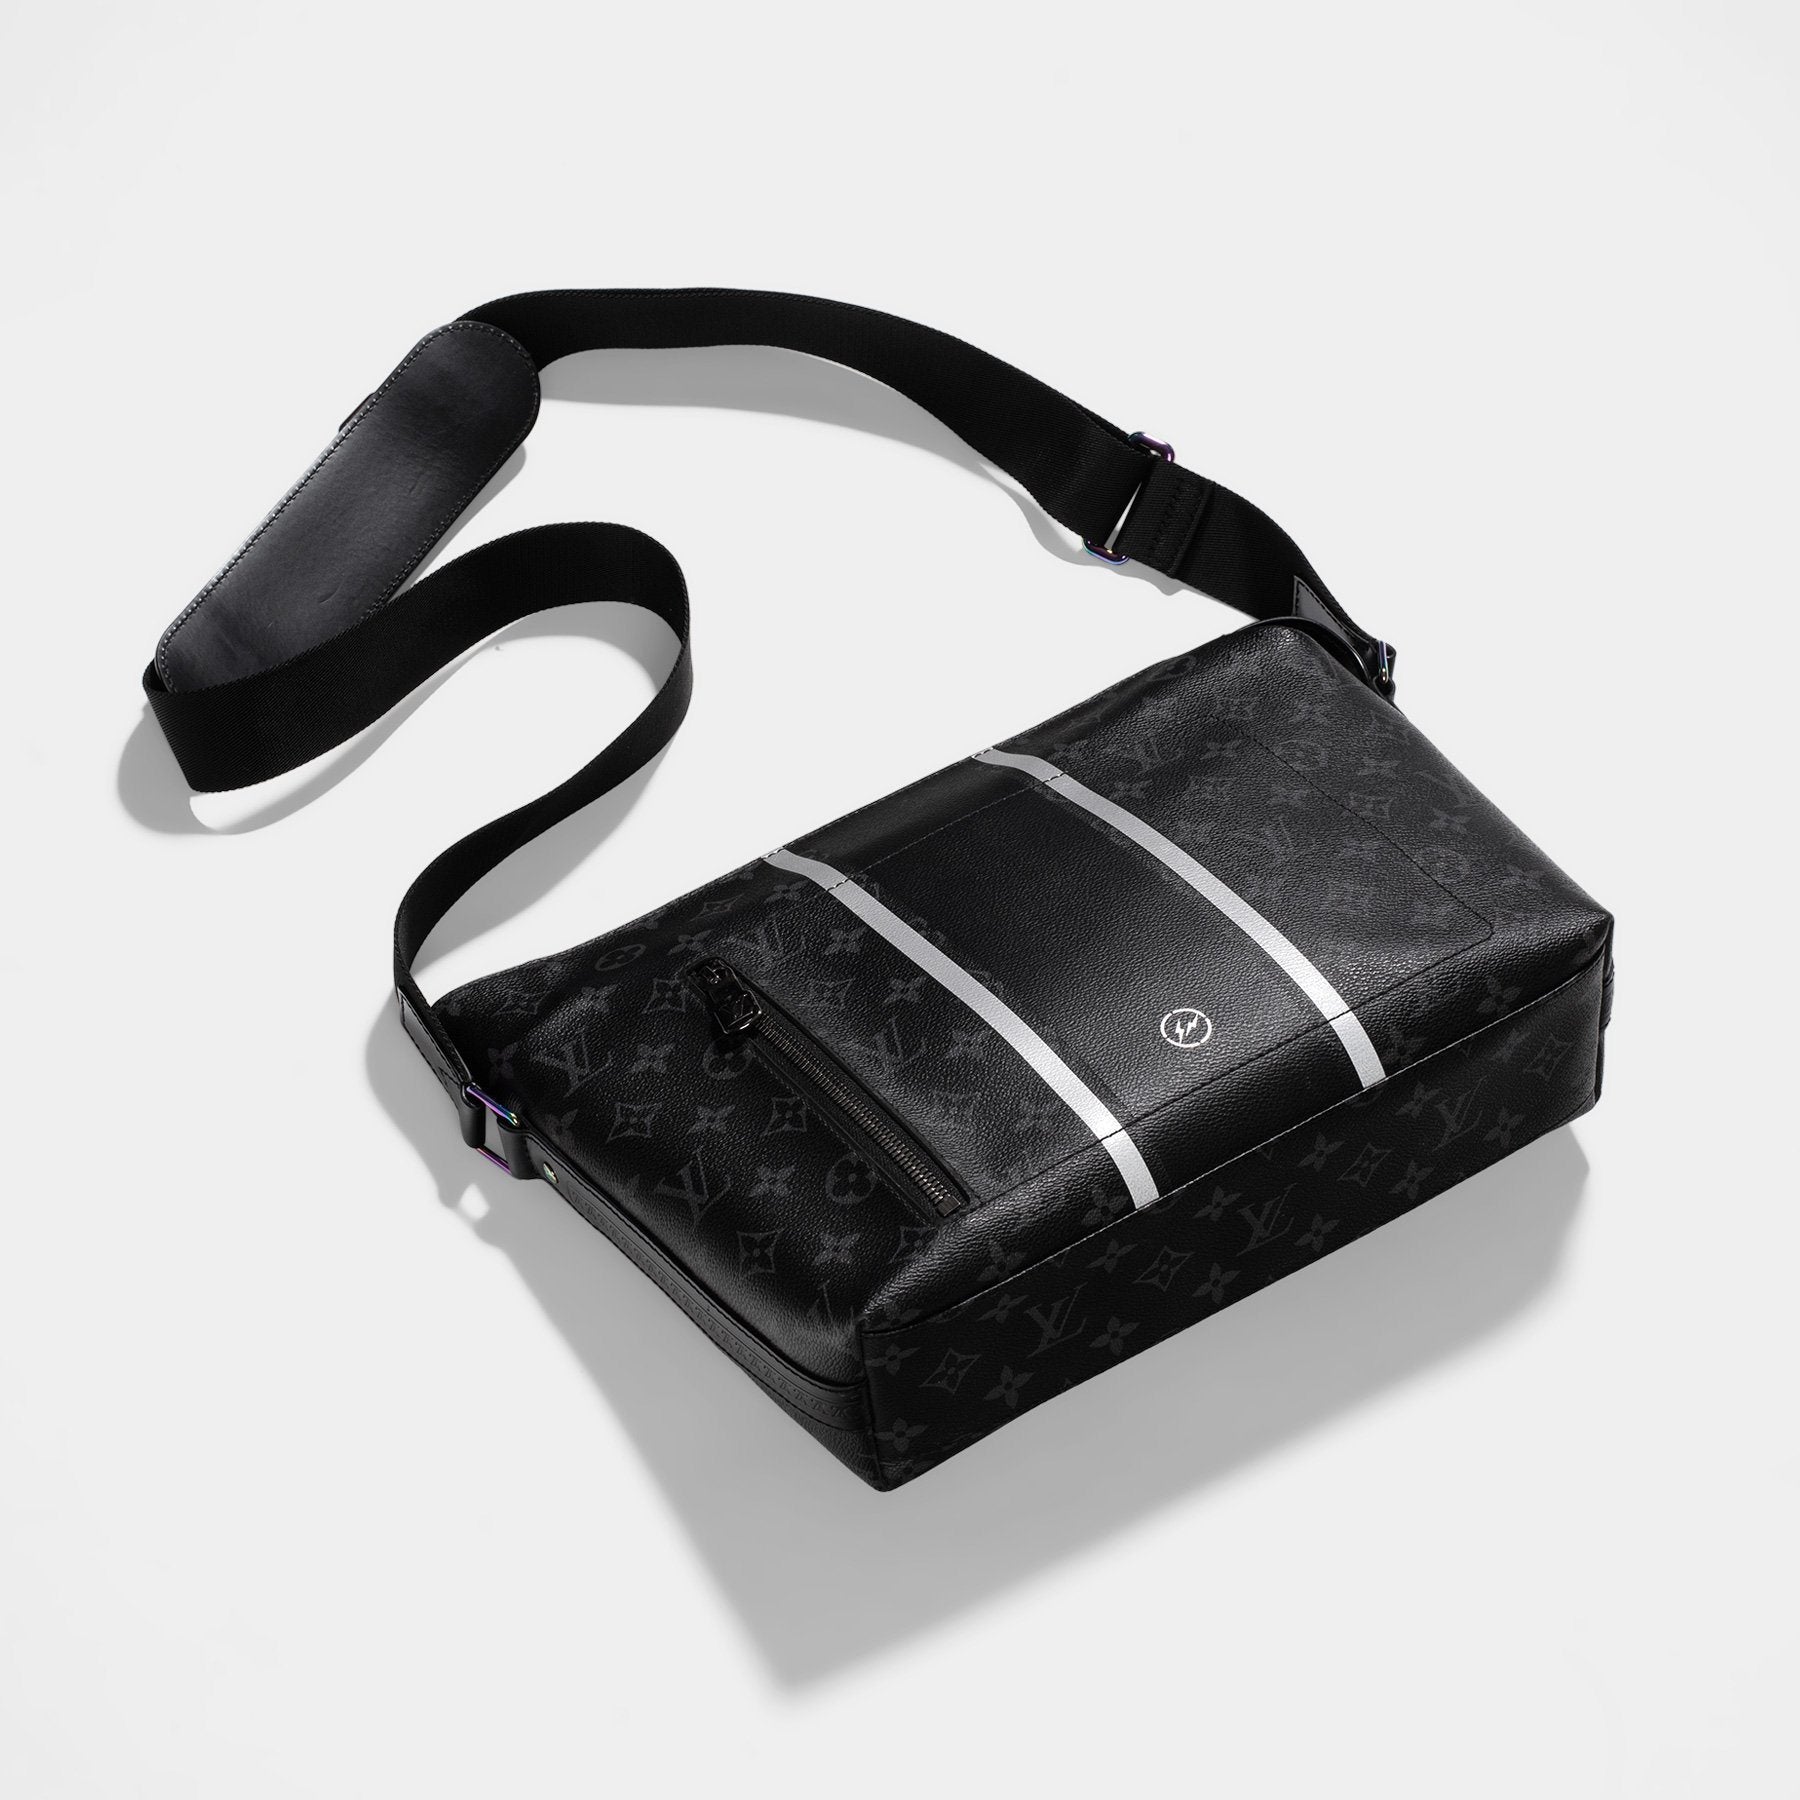 Louis Vuitton x Fragment Monogram Eclipse Bucket Bag